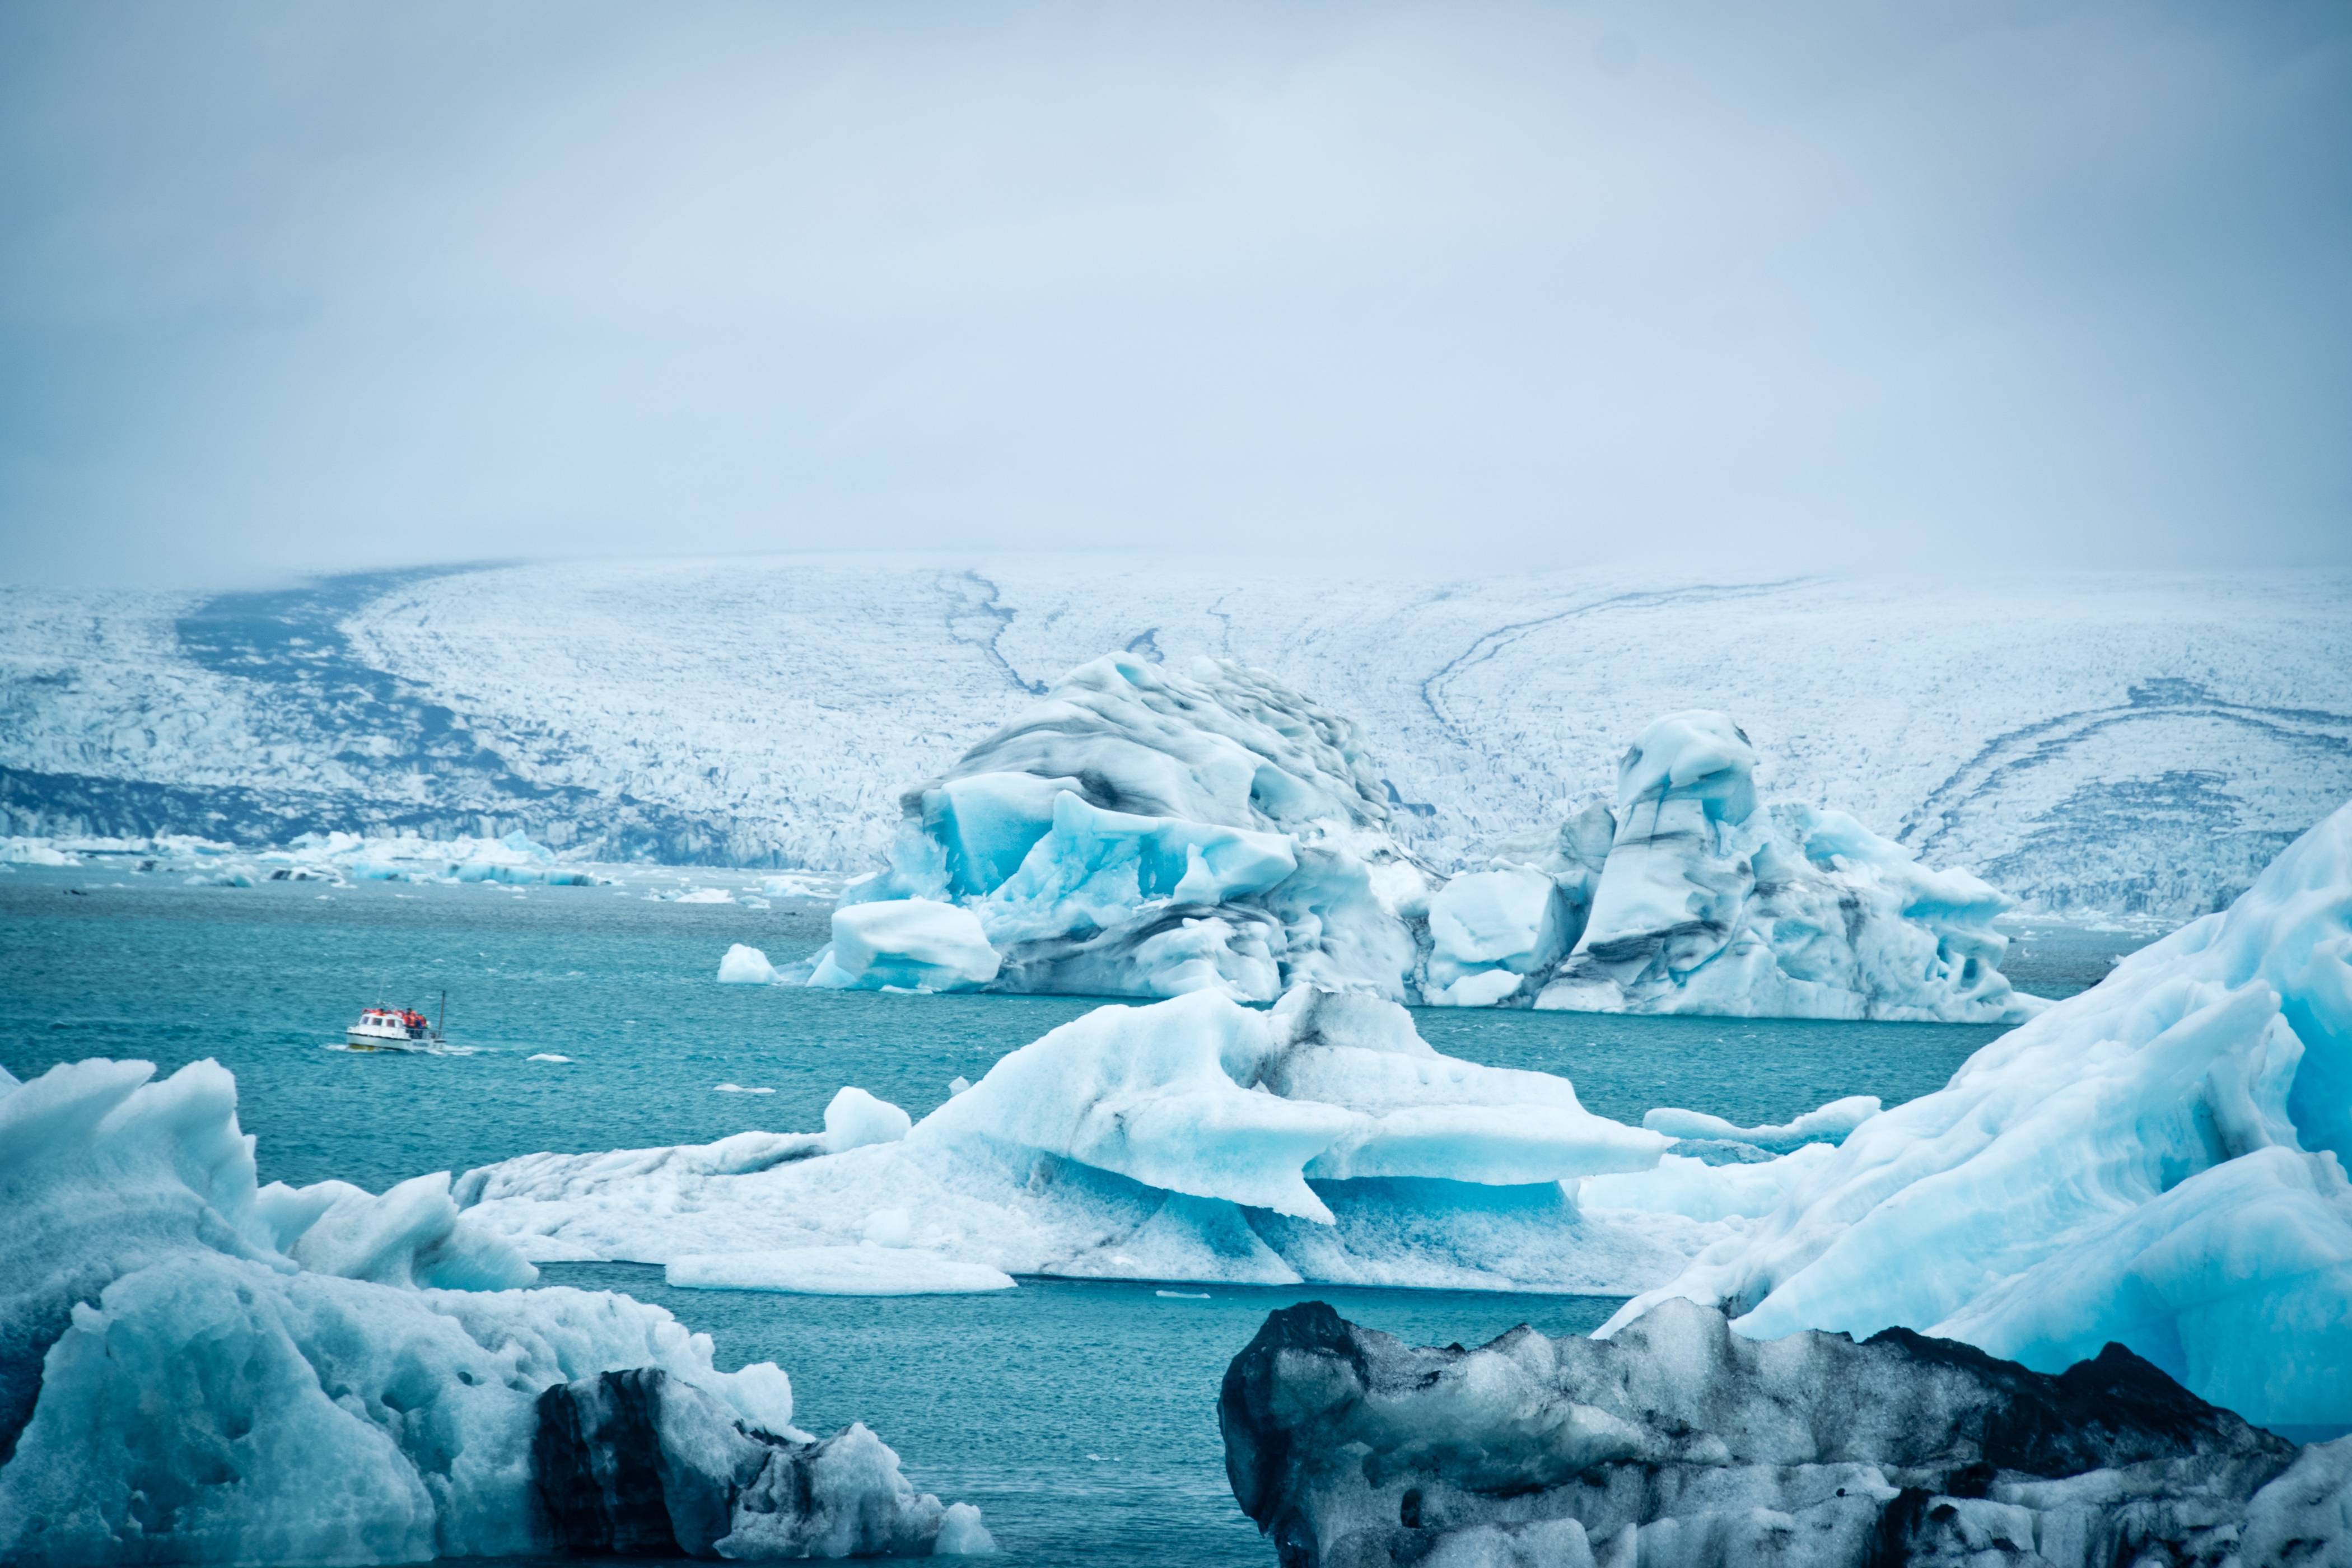 jokulsarlon-glacier-lagoon-white-icebergs-around-a-boat-with-passengers